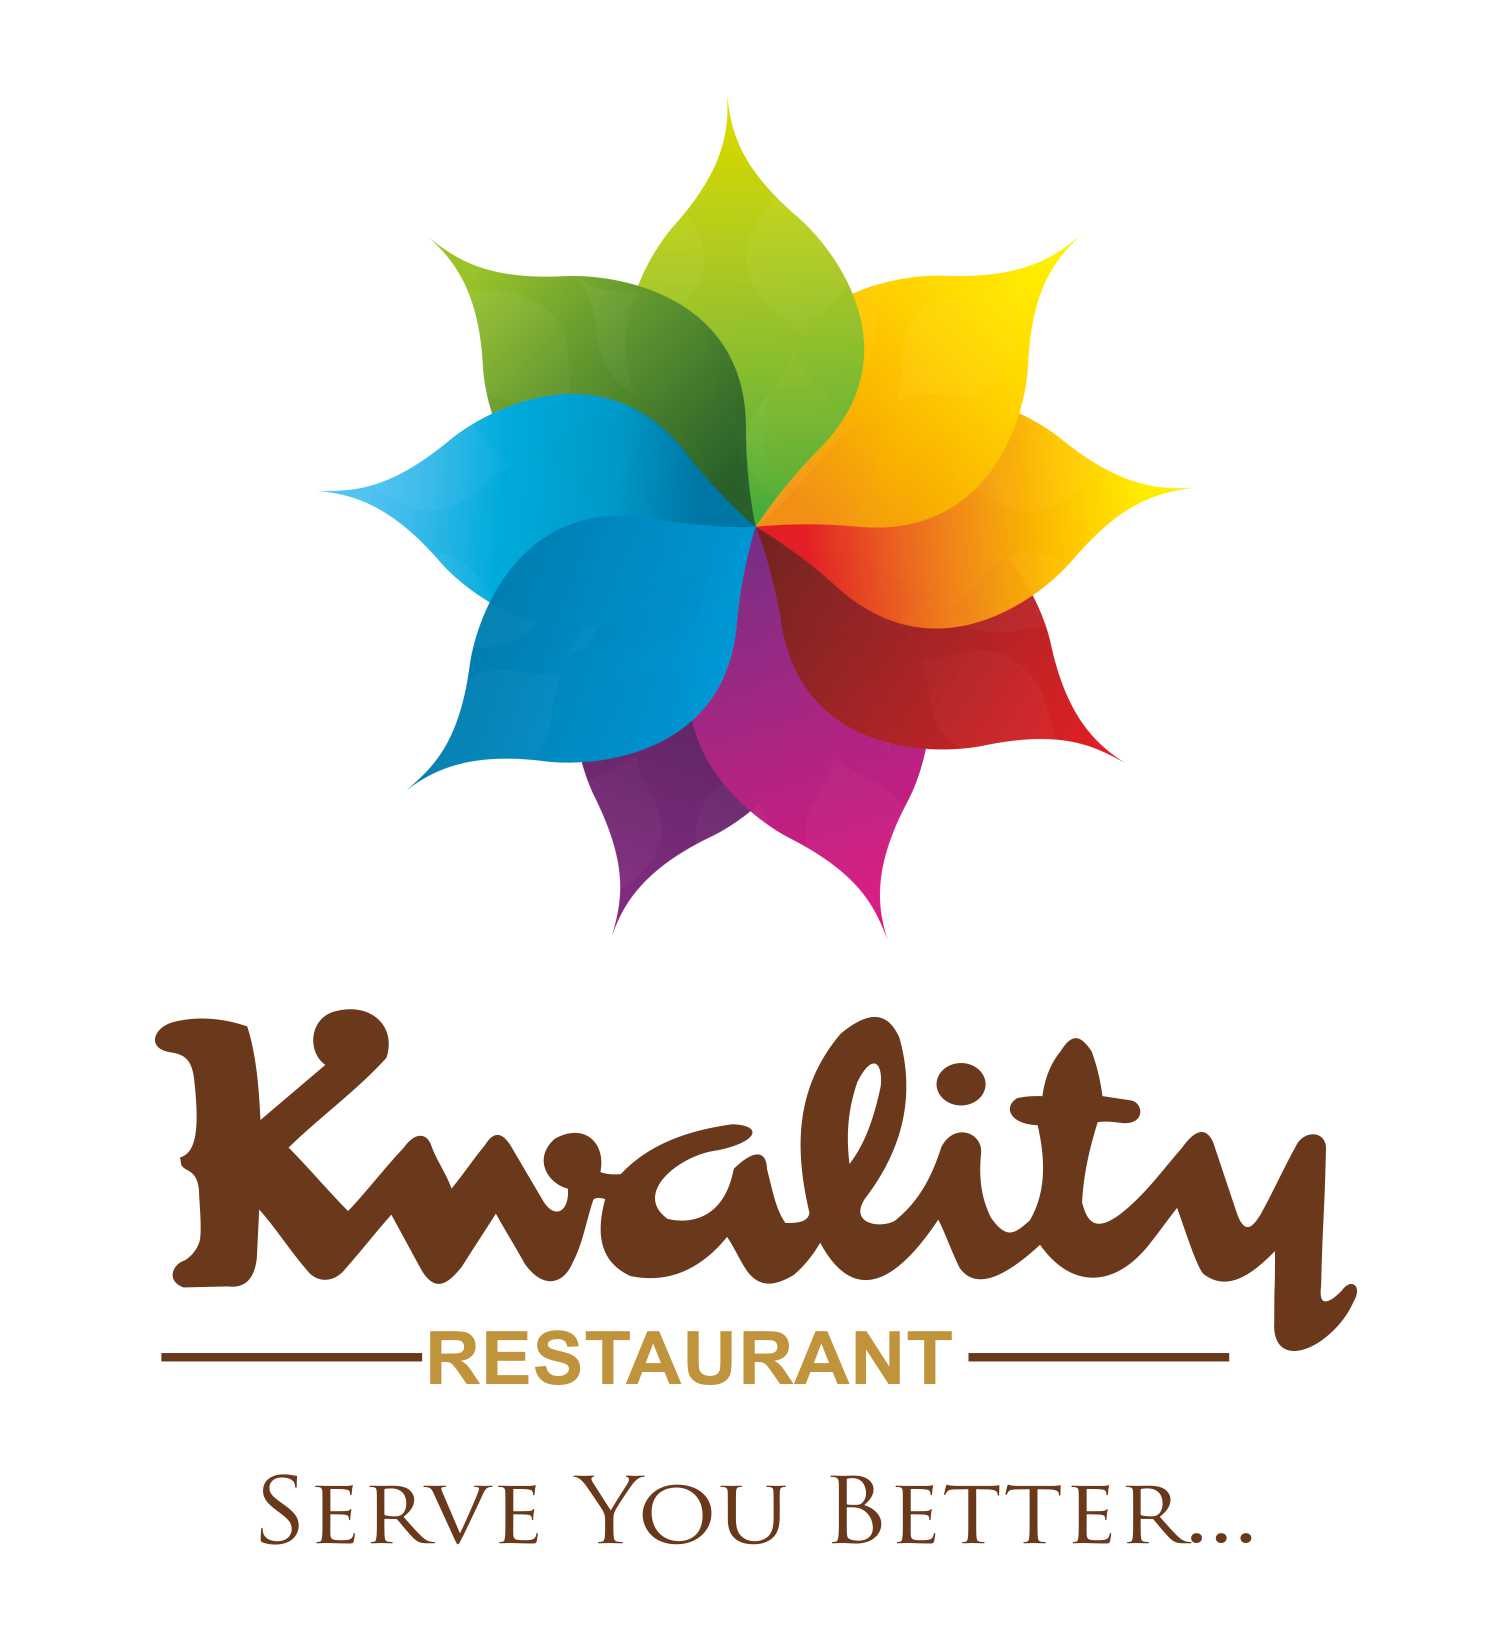 Kwality Restaurant Logo Design